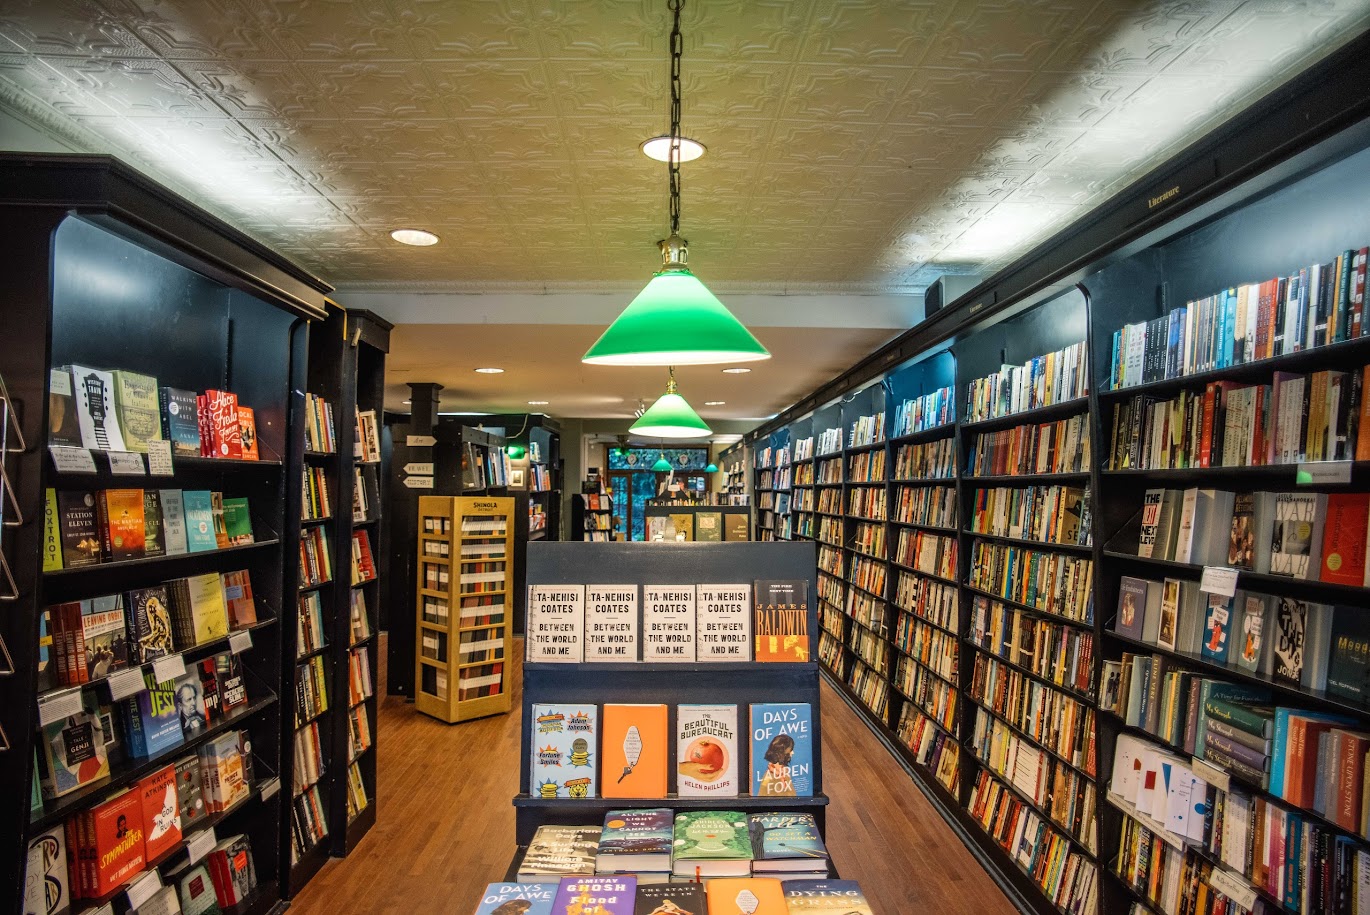 Community Bookstore